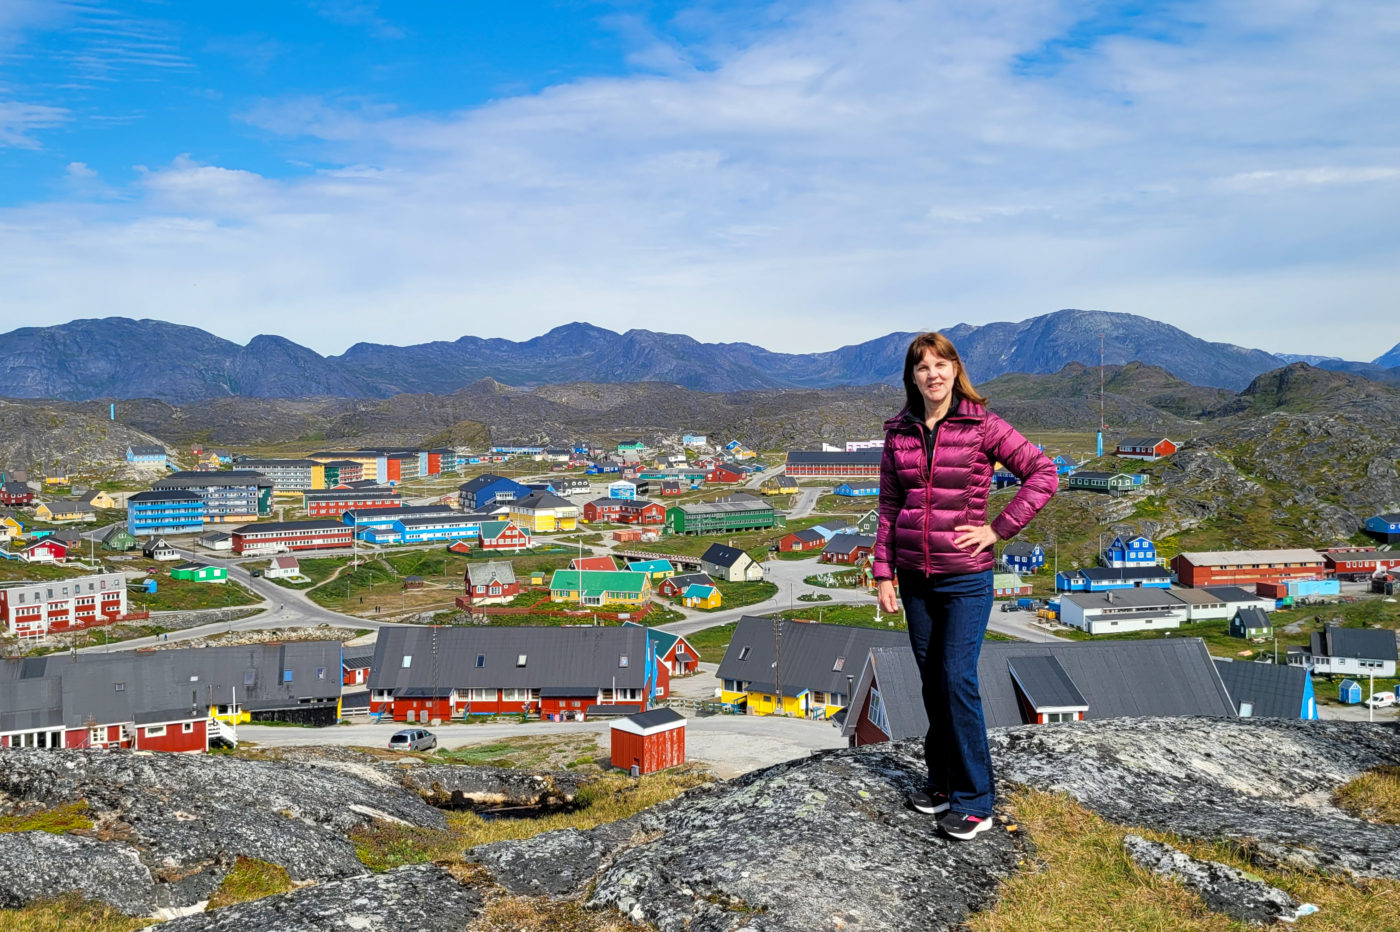 Paamiut, Greenland Walking Tour and Highlights